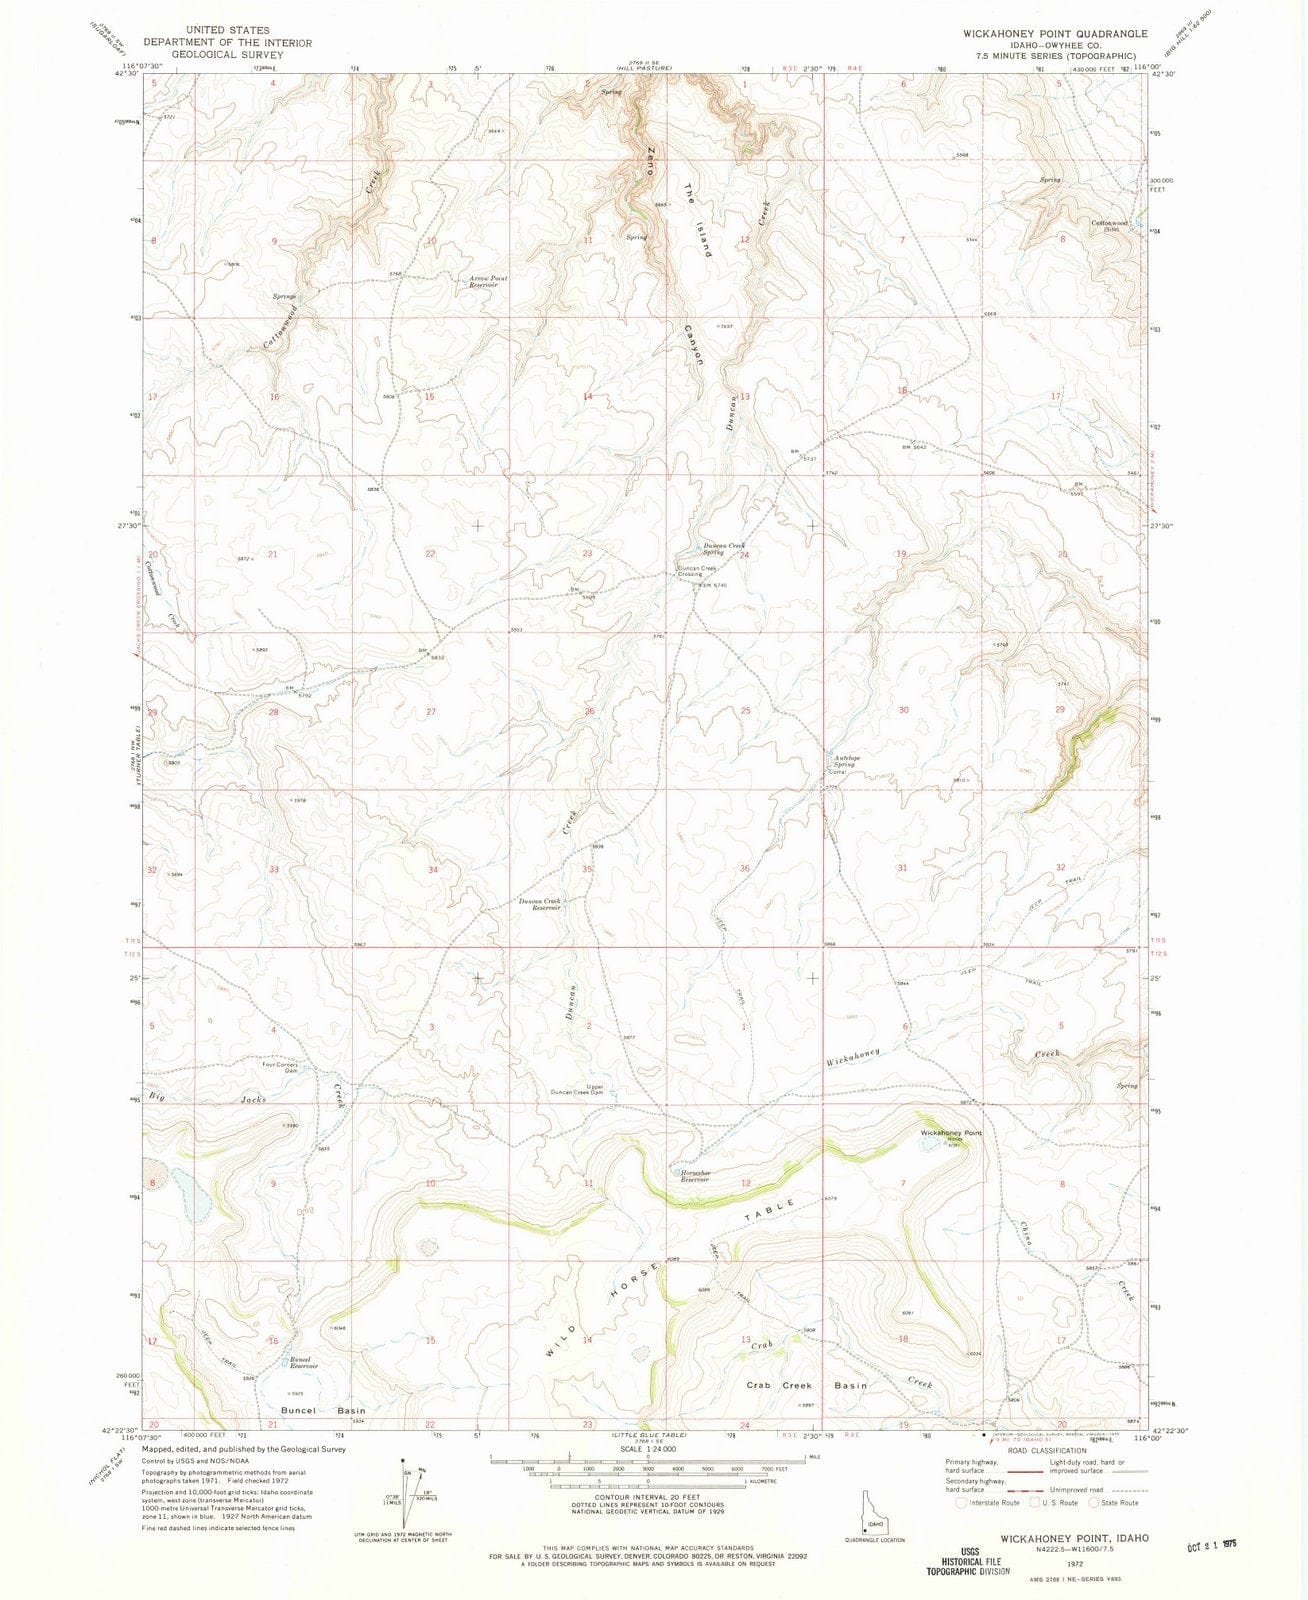 1972 Wickahoney Point, ID - Idaho - USGS Topographic Map